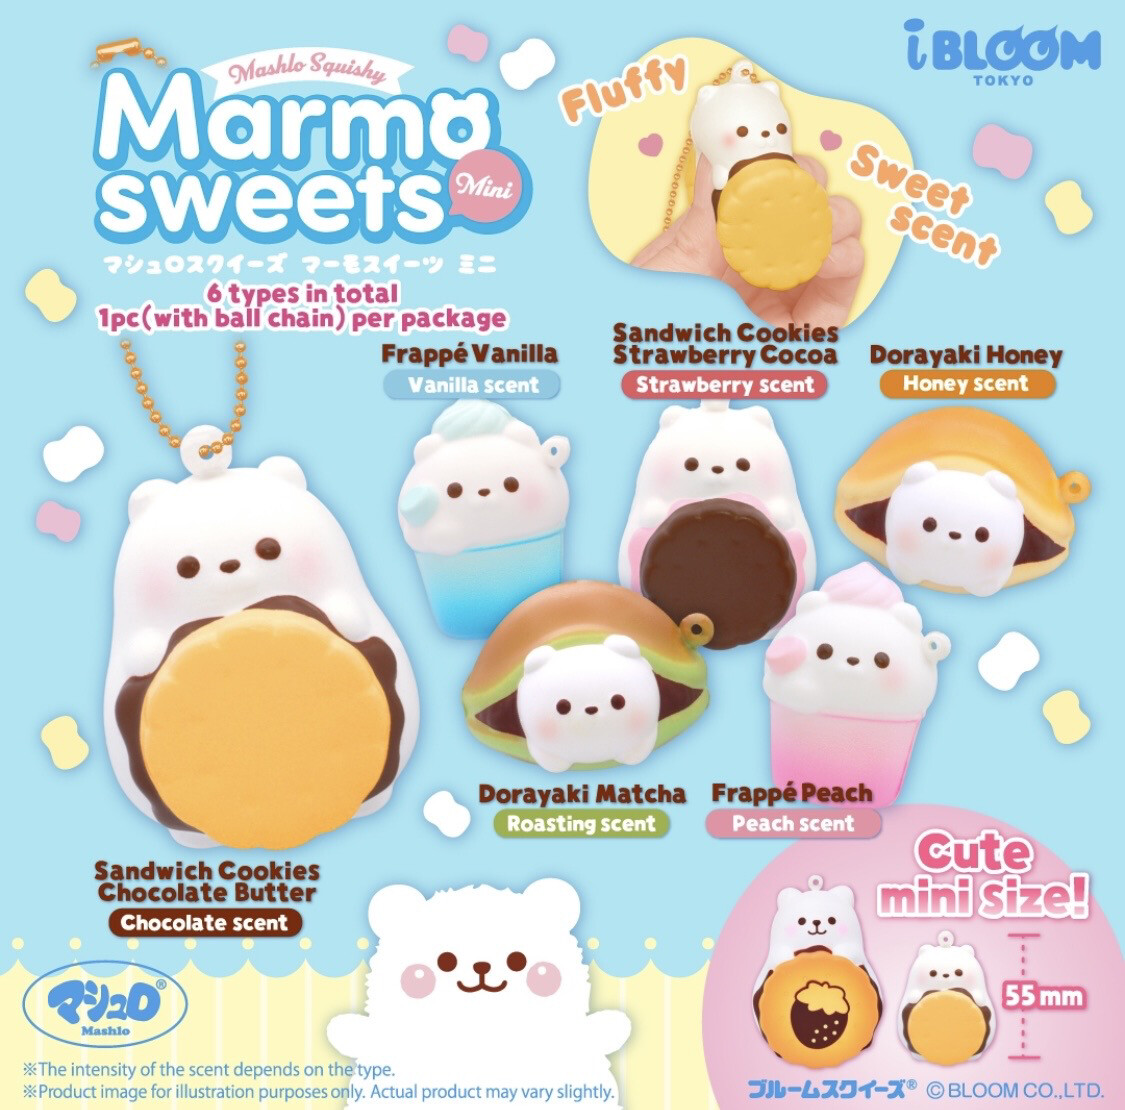 iBloom Marmo Sweets Mini Squishy Blind Box Limited